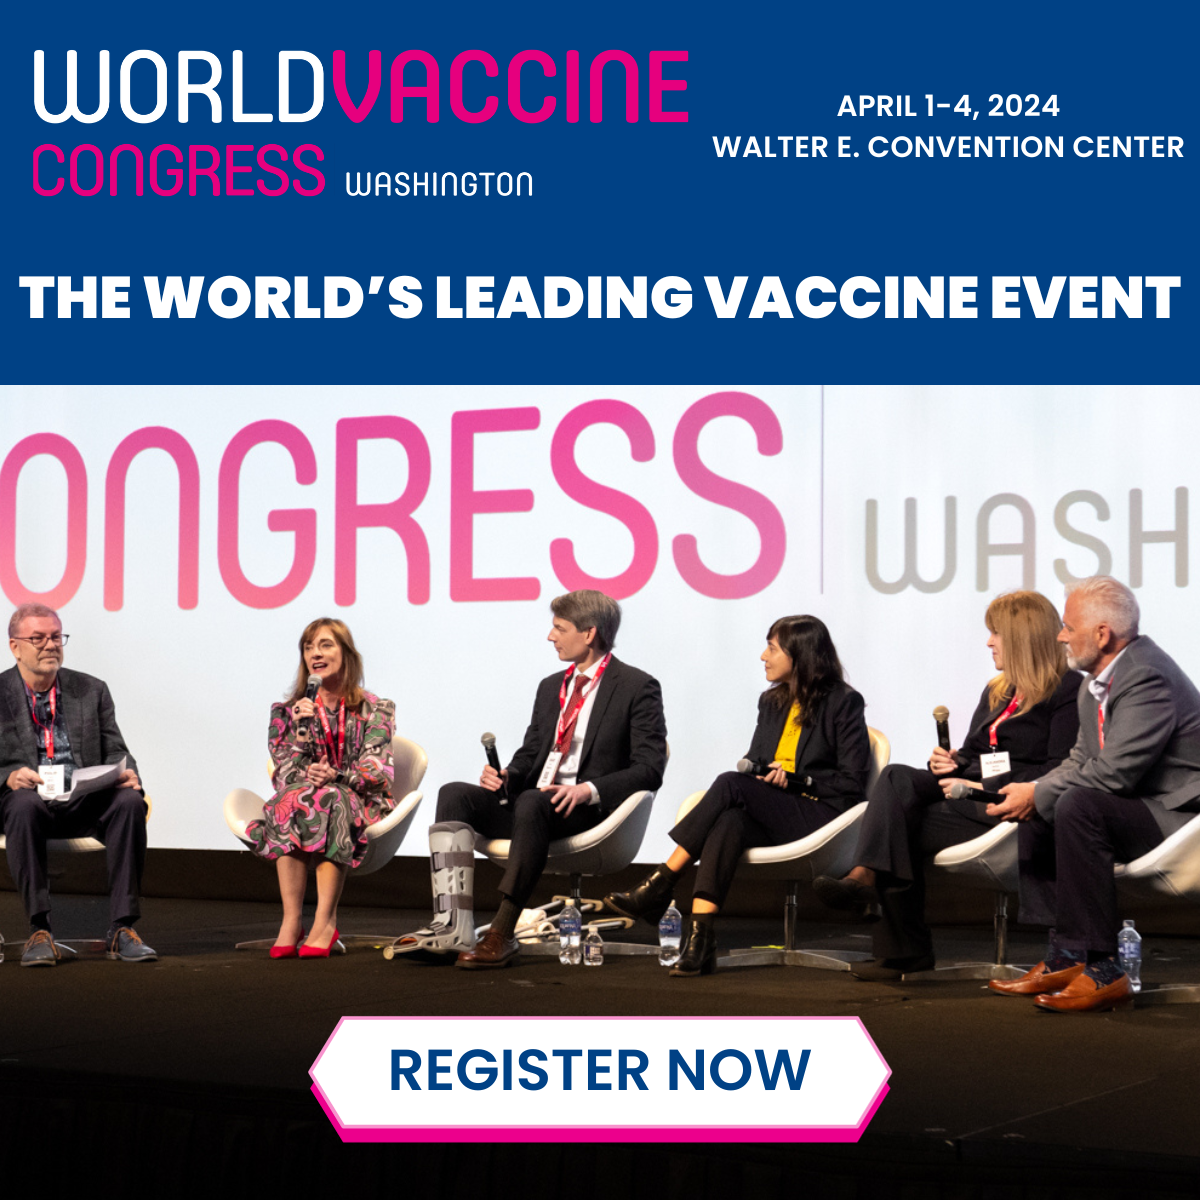 Image Credit: World Vaccine Congress Washington